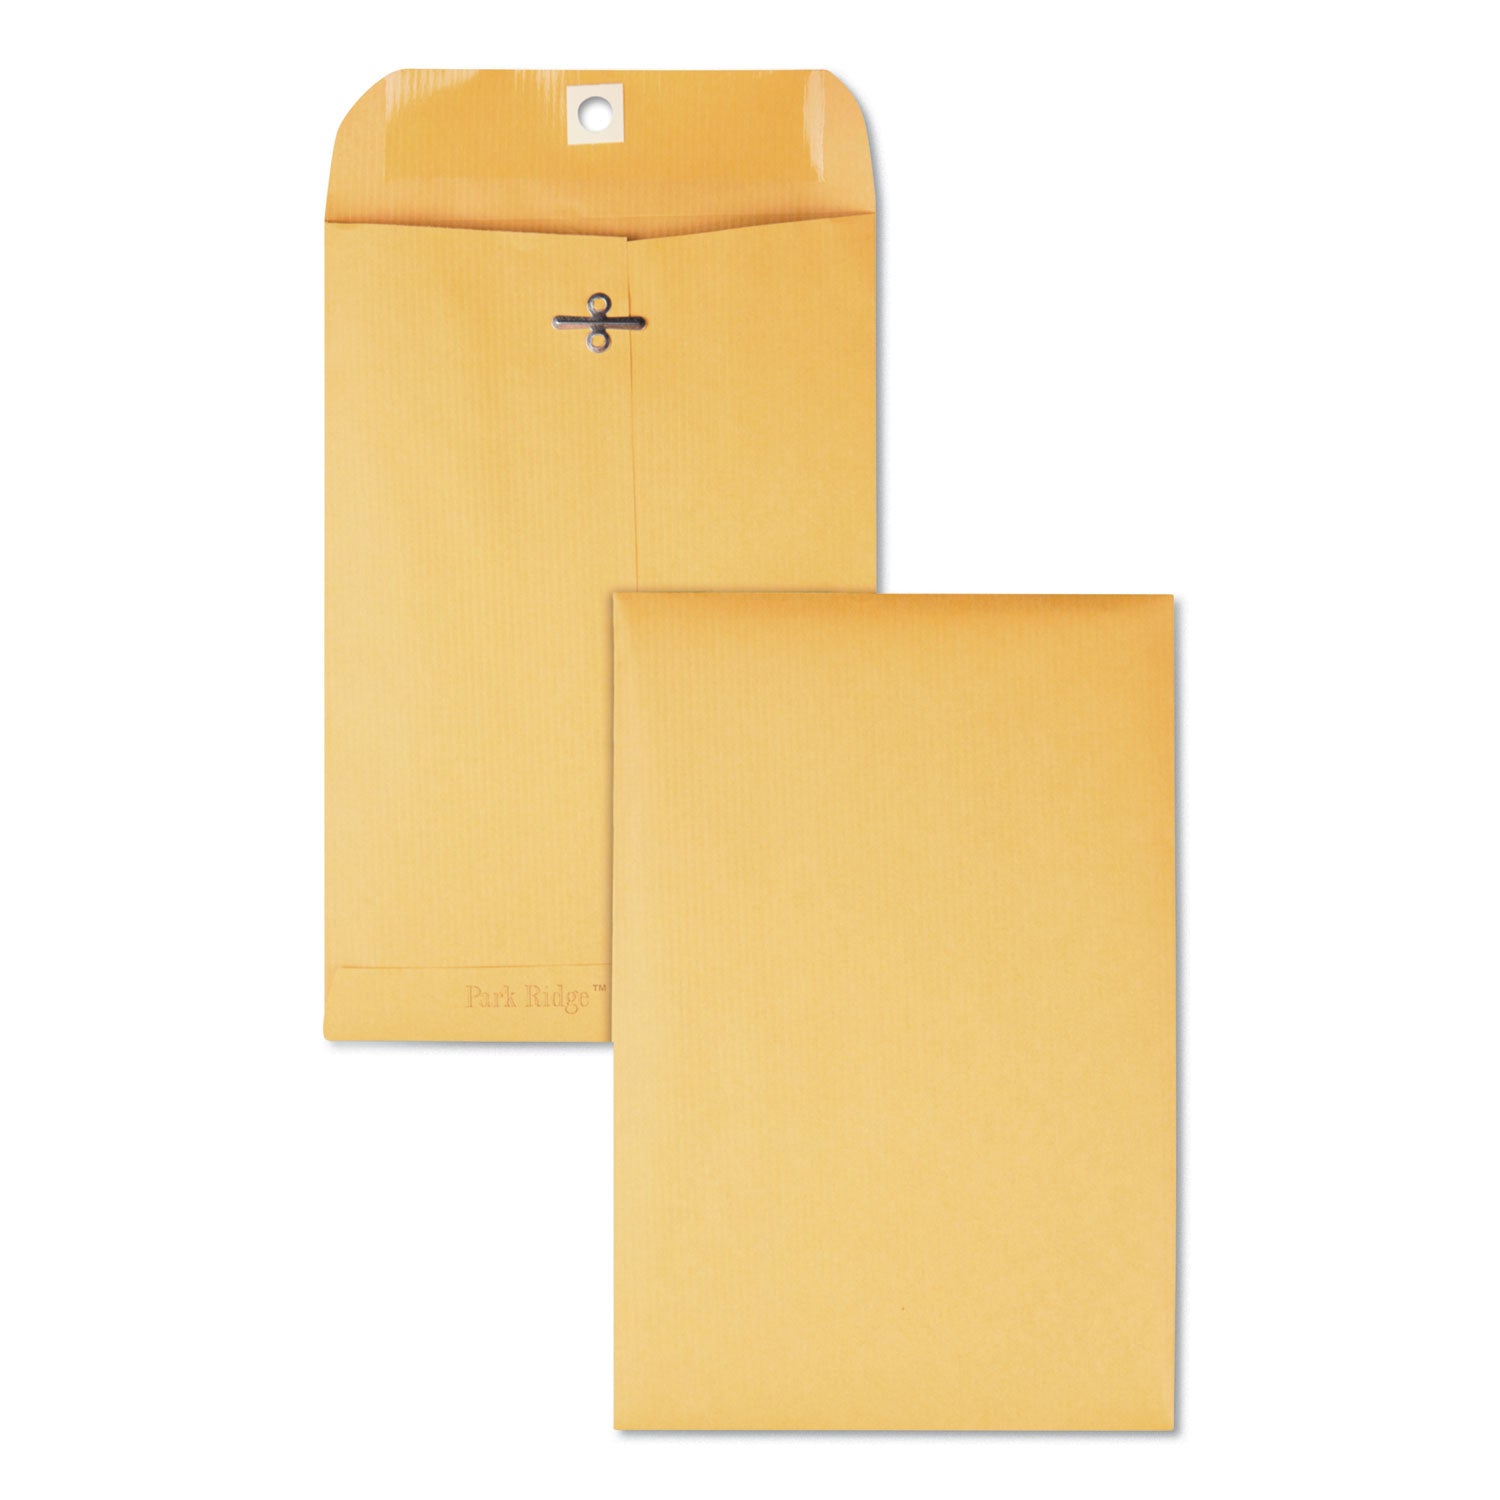 Park Ridge Kraft Clasp Envelope, #55, Square Flap, Clasp/Gummed Closure, 6 x 9, Brown Kraft, 100/Box - 